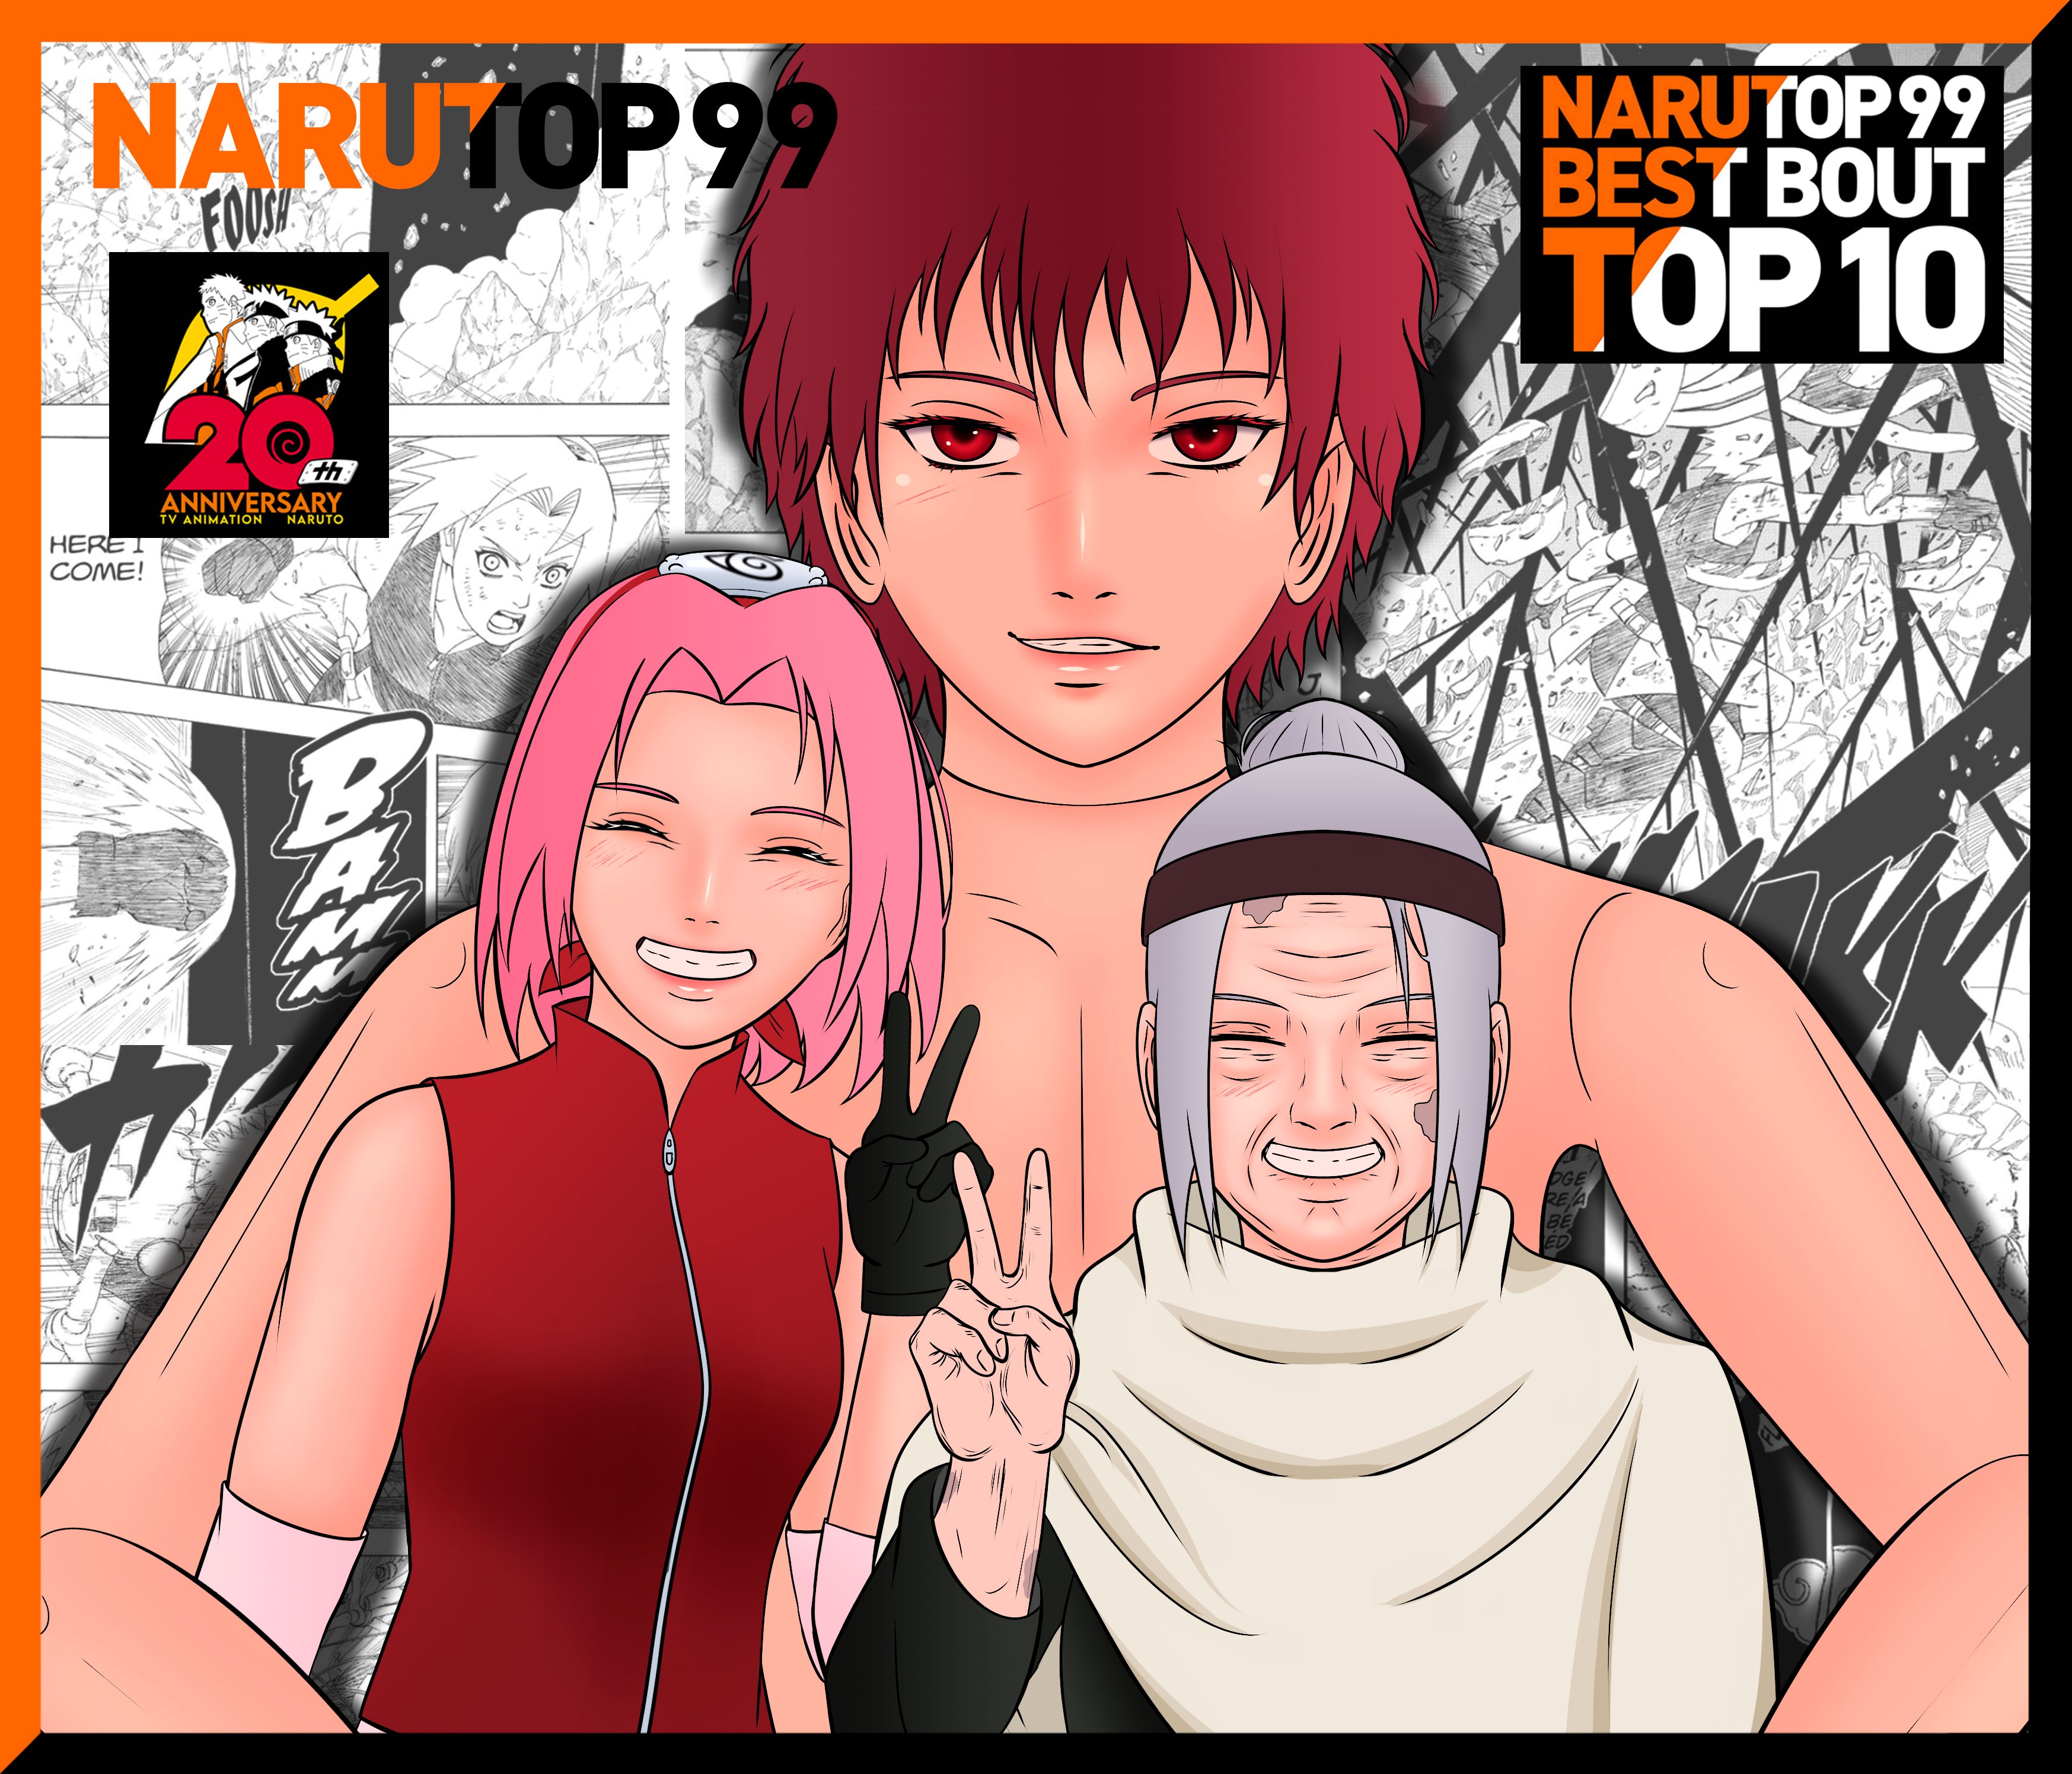 Narutop99 shocks fans as Sakura vs Sasori bout triumphs Naruto vs Sasuke